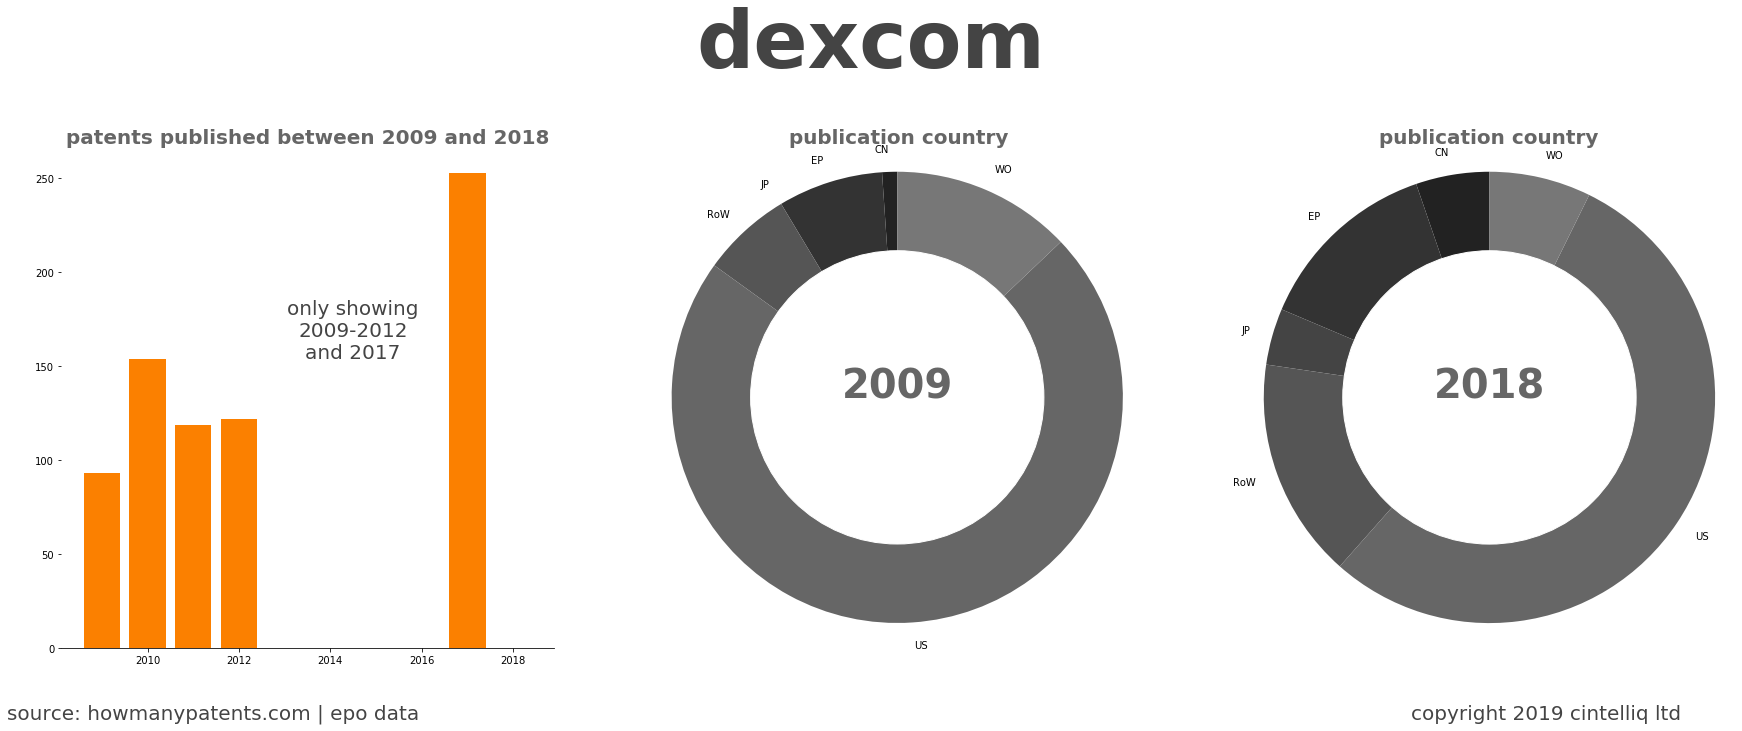 summary of patents for Dexcom